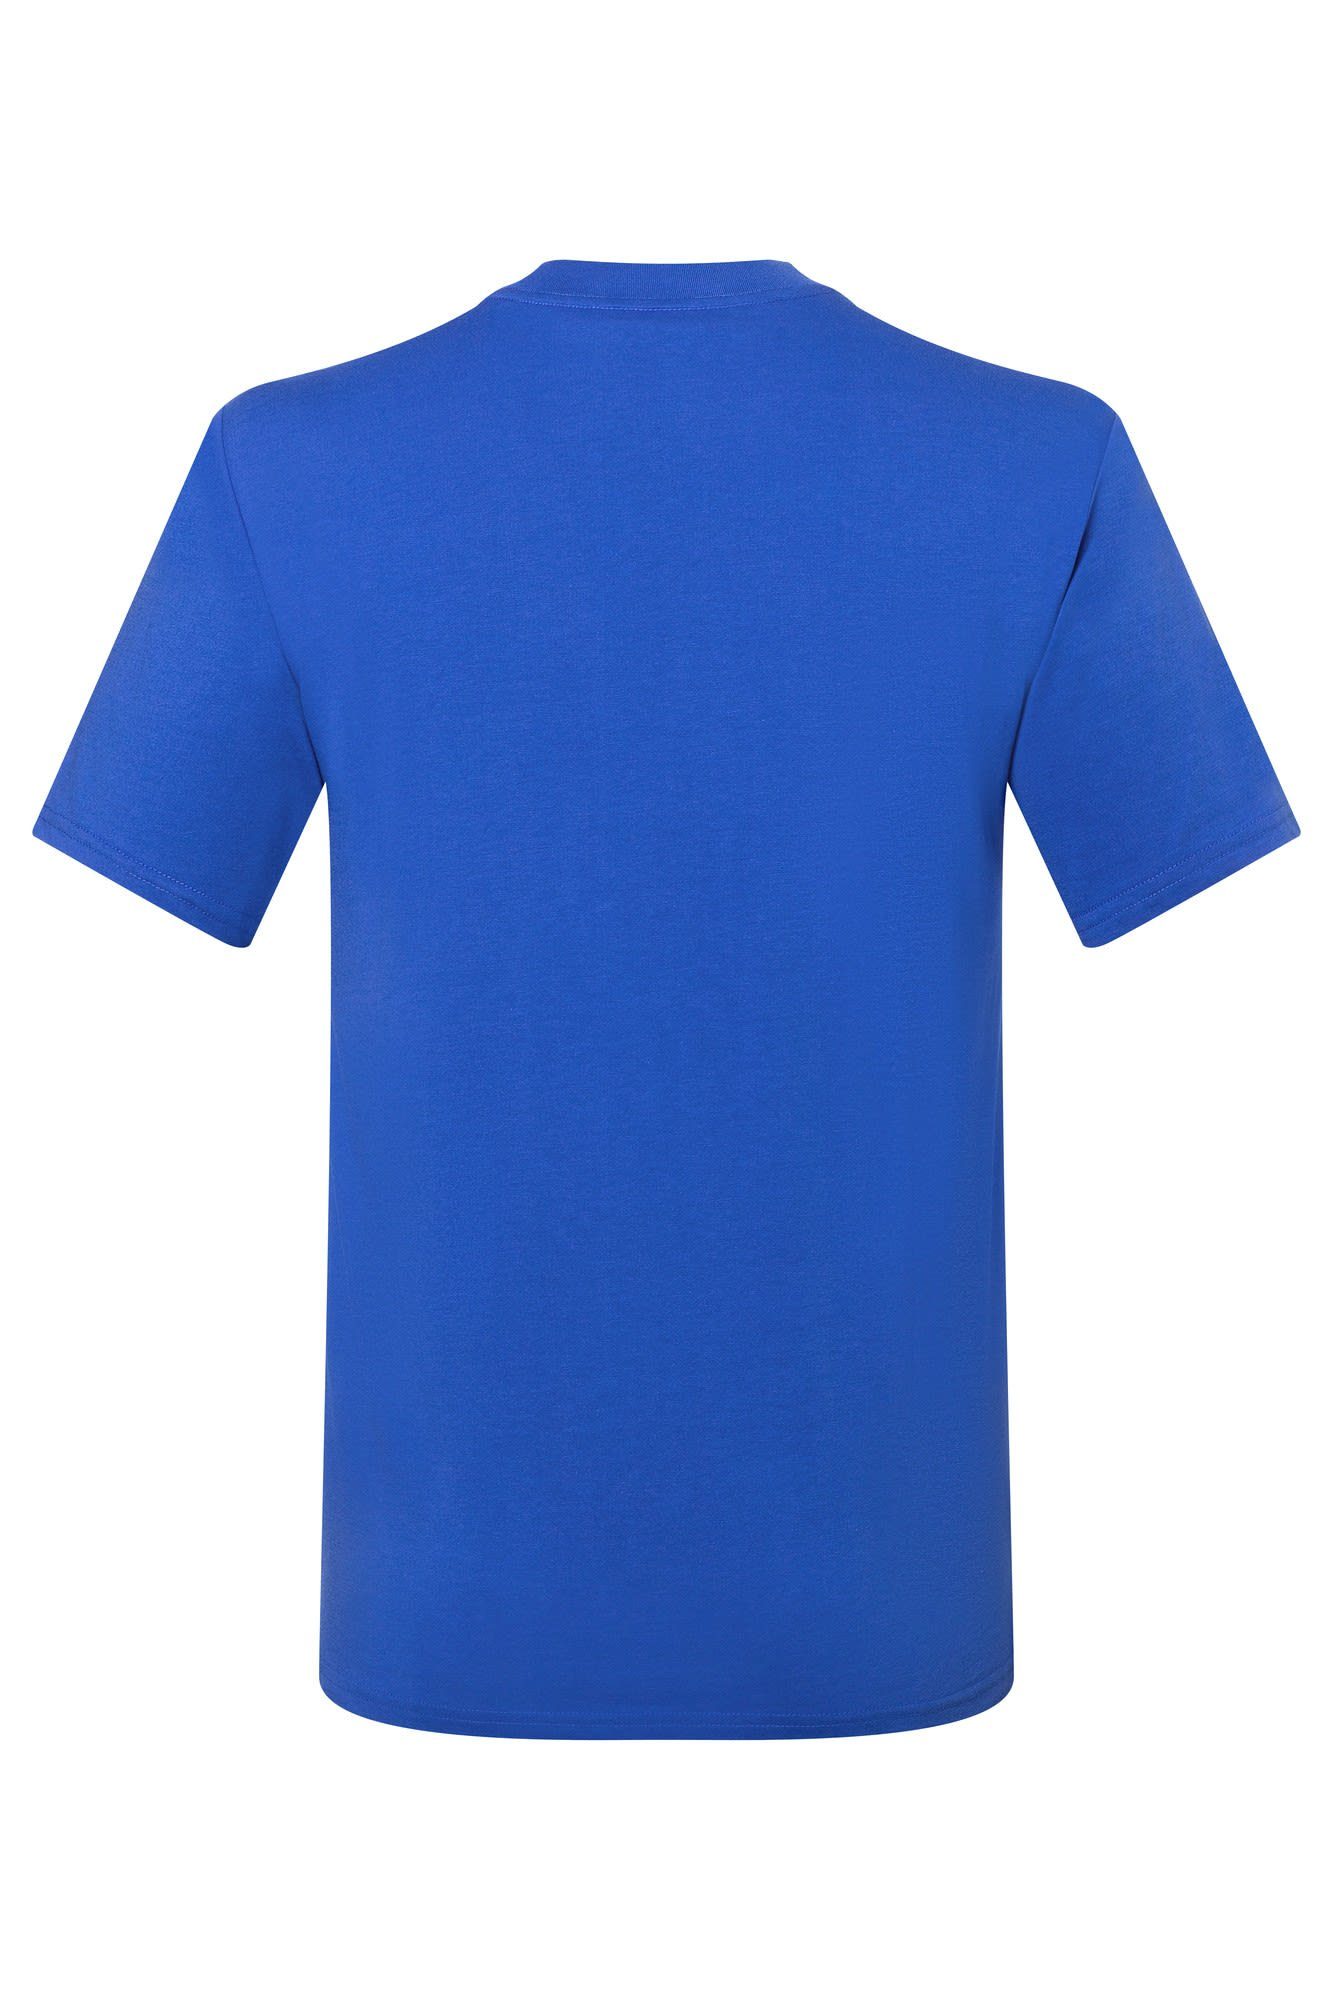 Herren M Marmot Blue T-Shirt Coastal Short-sleeve Marmot Trail Tee